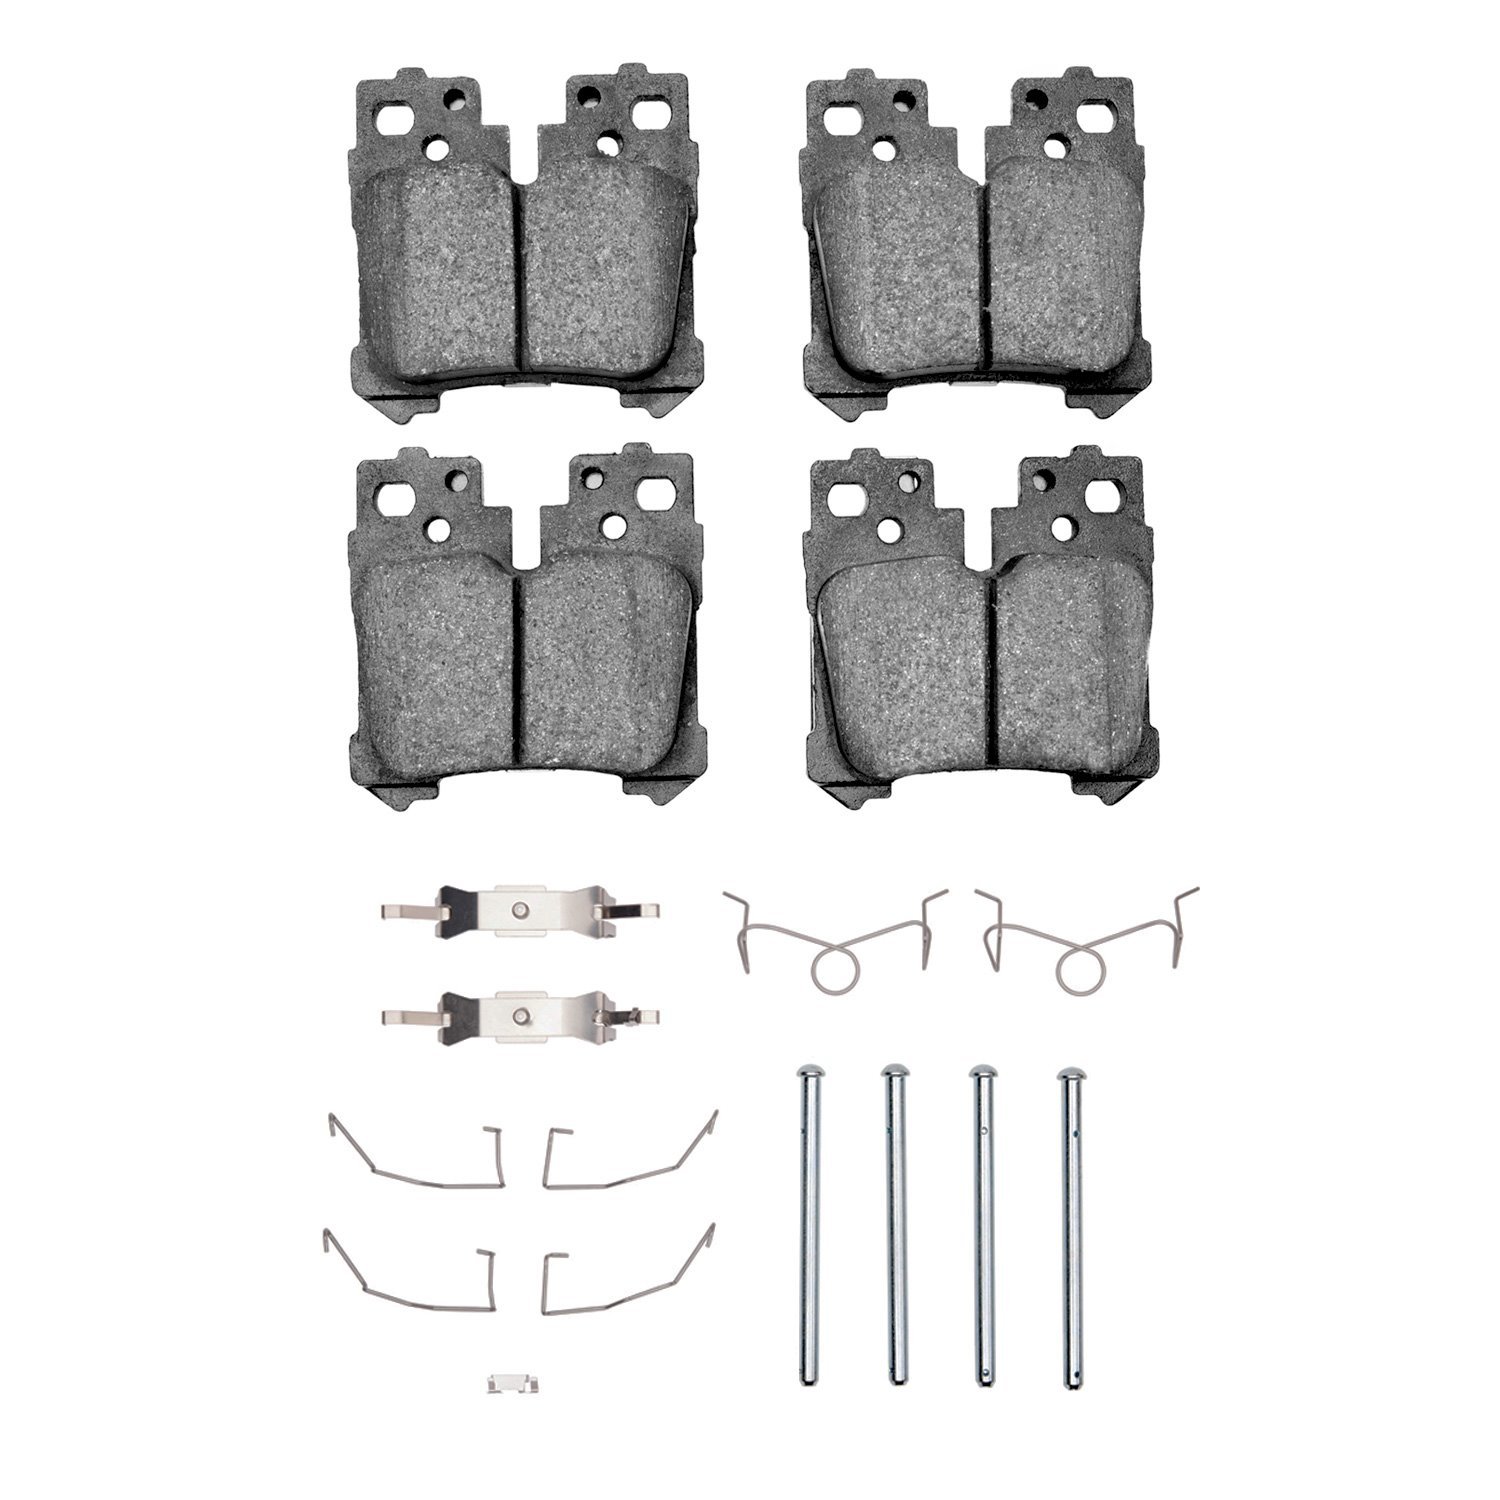 1310-1283-01 3000-Series Ceramic Brake Pads & Hardware Kit, Fits Select Lexus/Toyota/Scion, Position: Rear